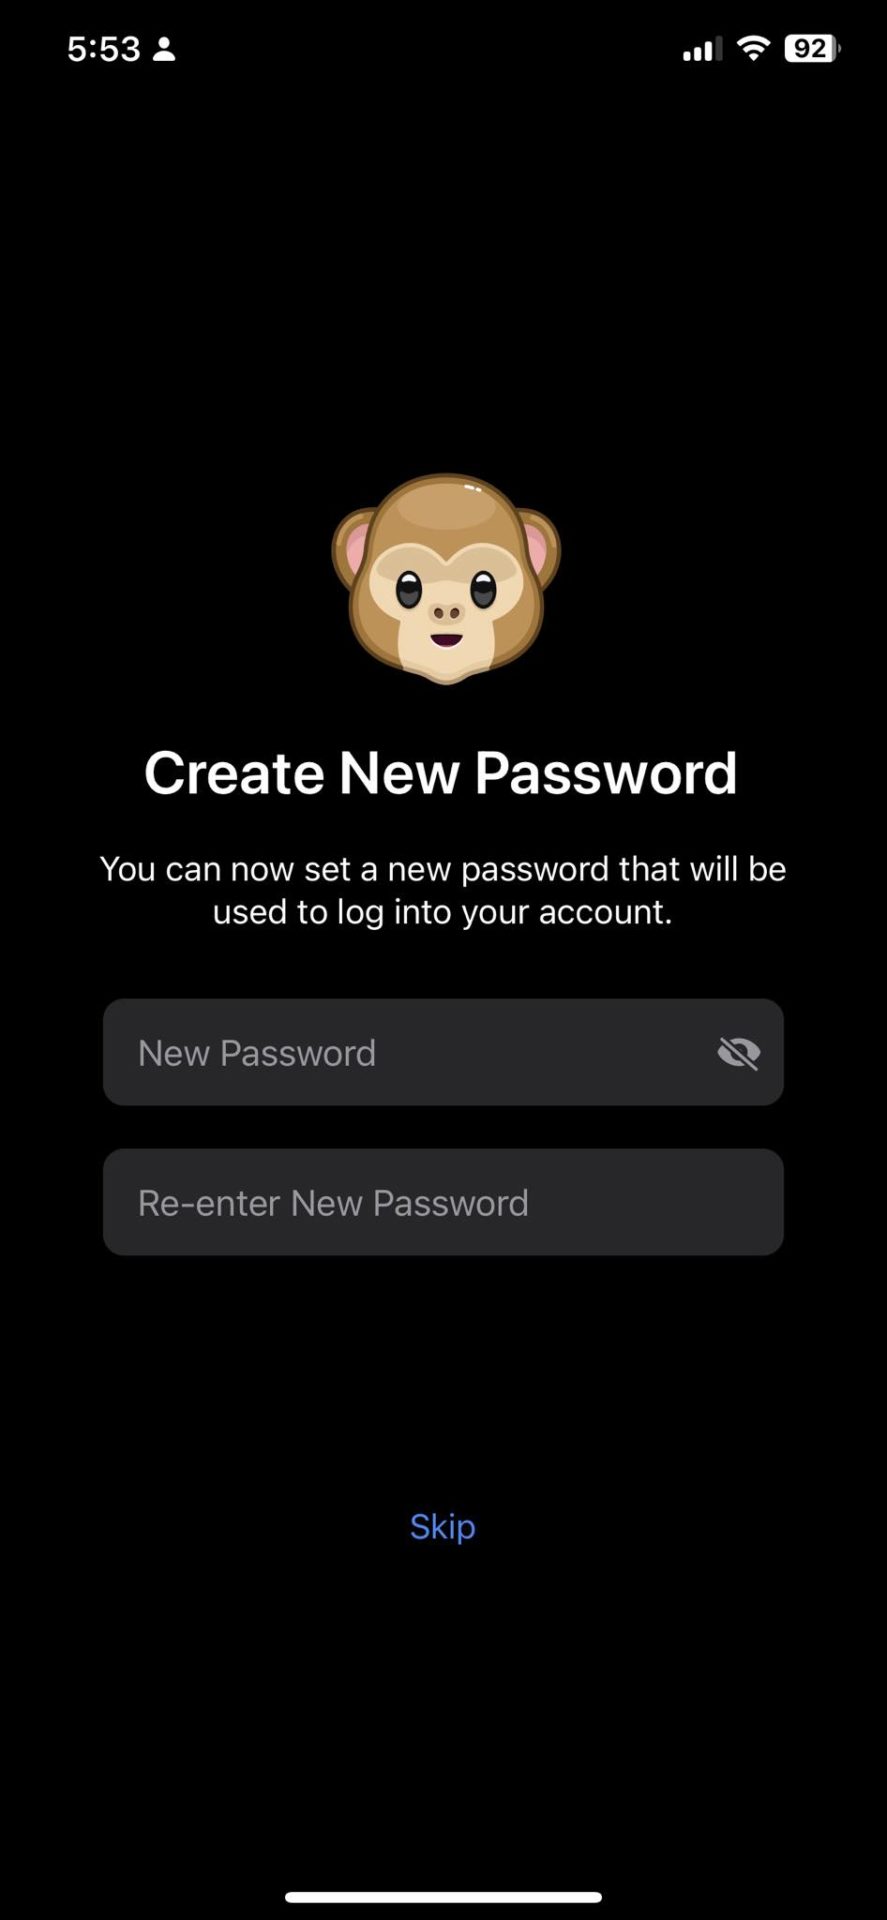 New password screen on Telegram 2FA